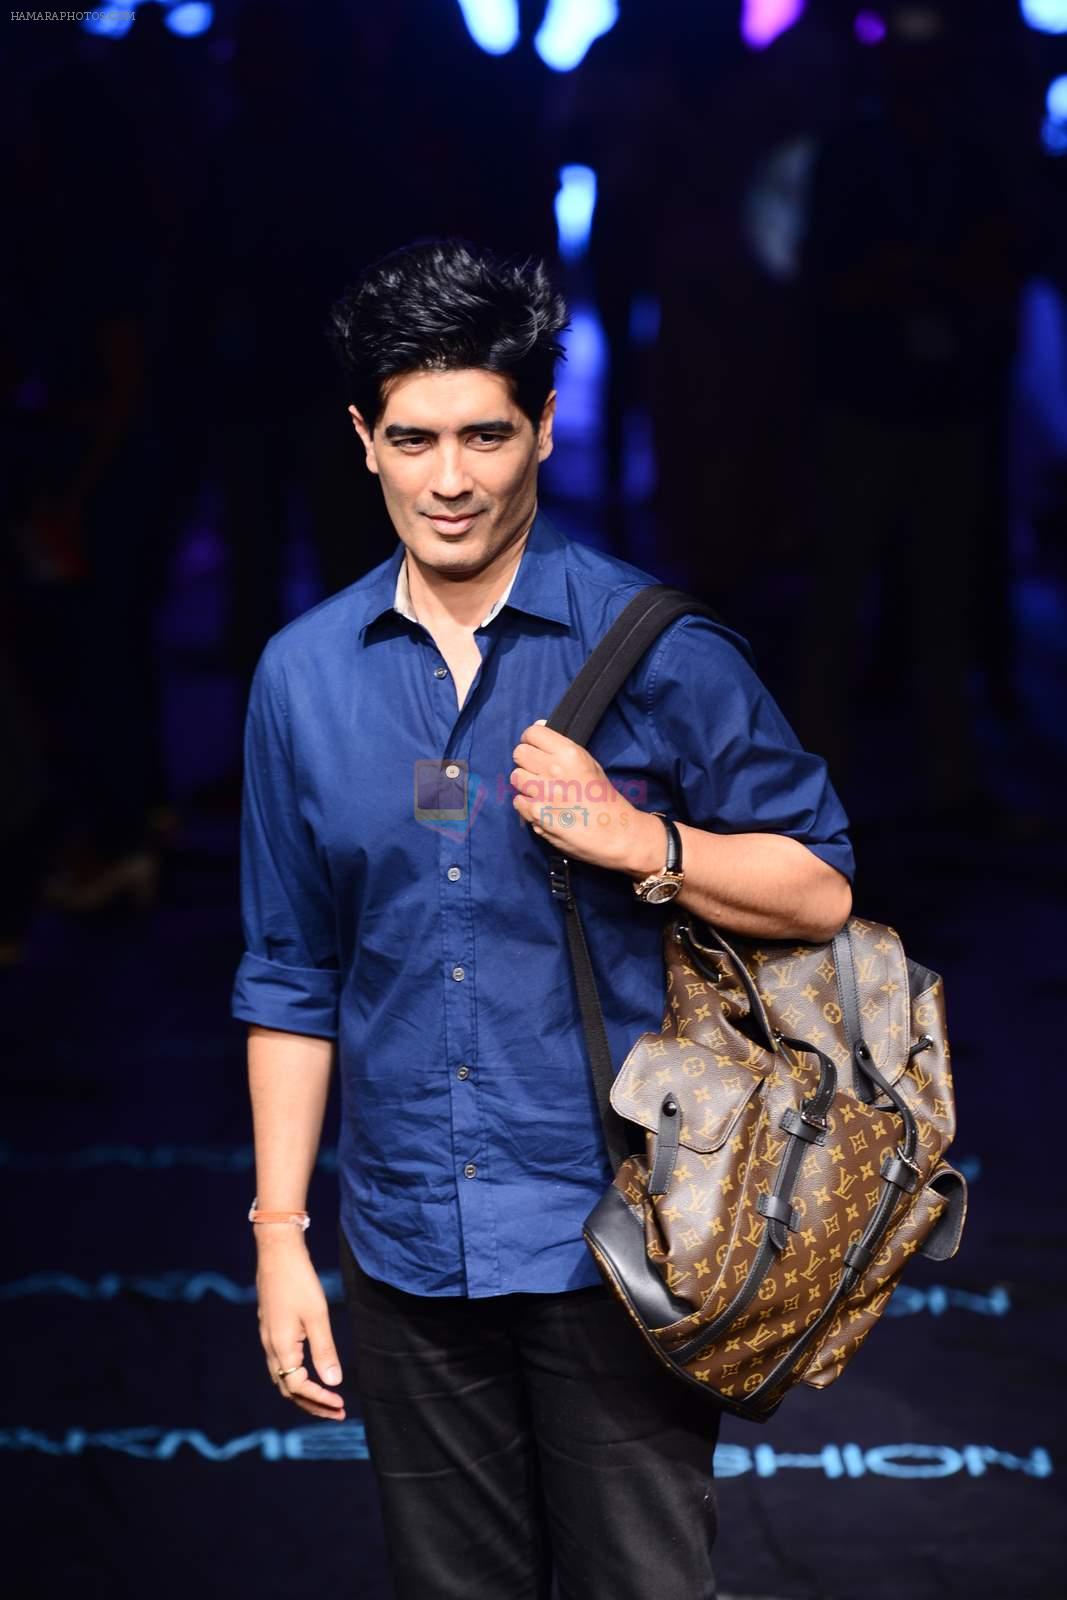 Manish Malhotra on Day 4 at Lakme Fashion Week 2015 on 21st March 2015